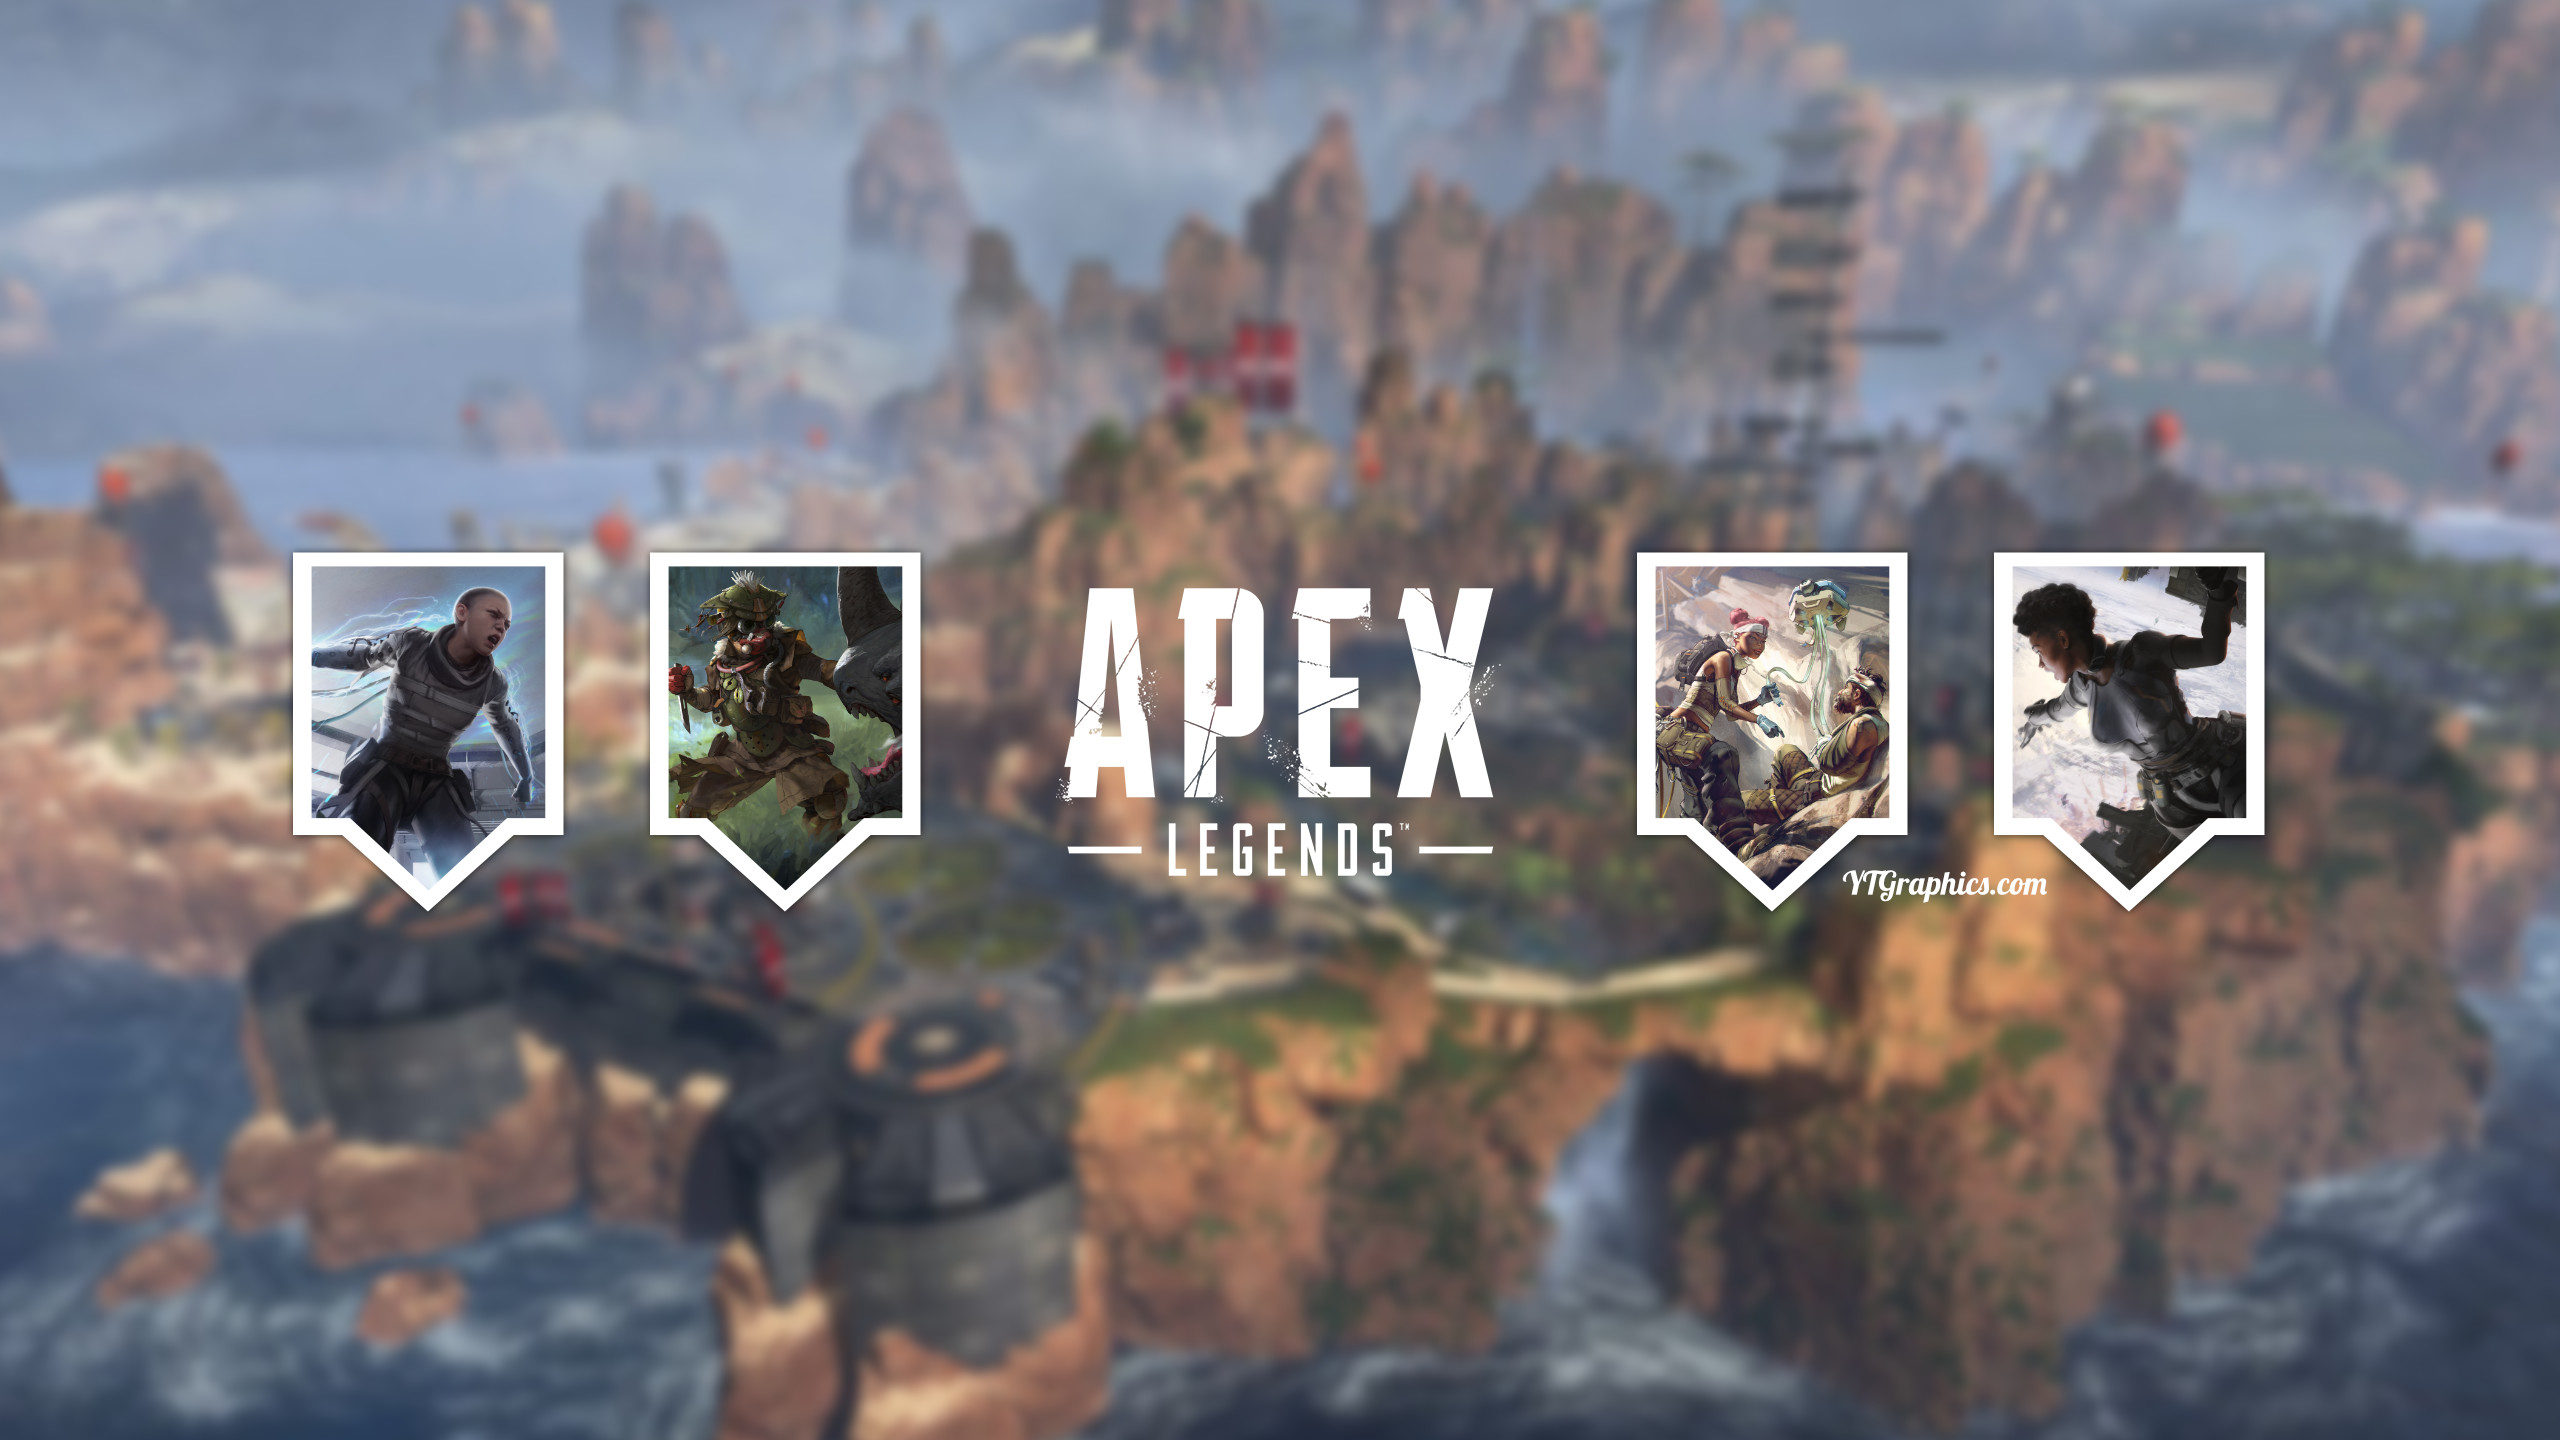 APEX LEGENDS YouTube Banner 2019 by uxoyy on DeviantArt